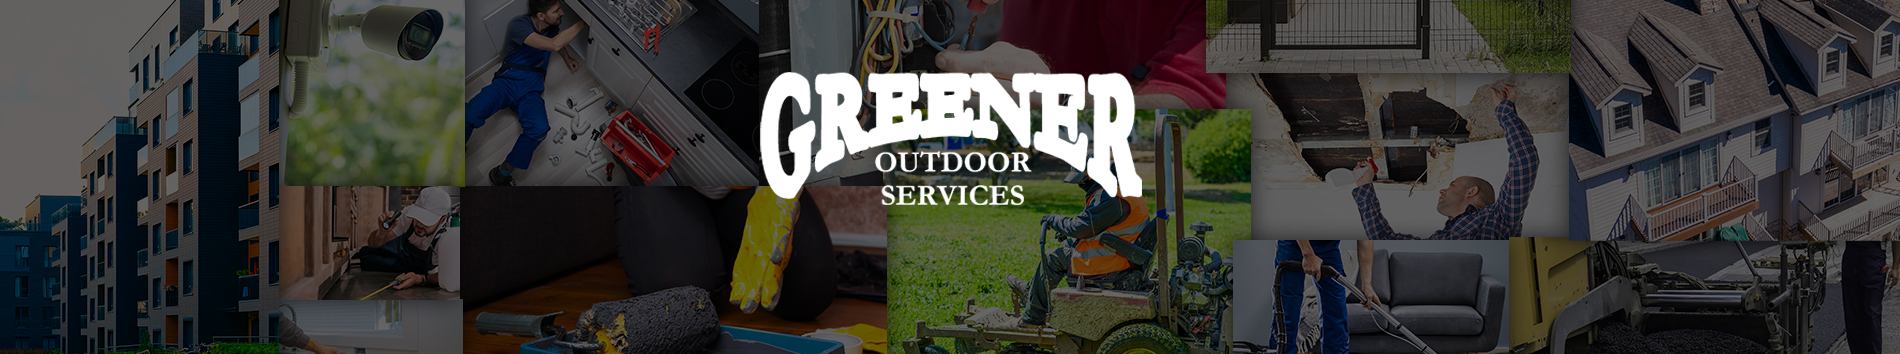 Greener Outdoor Services LLC